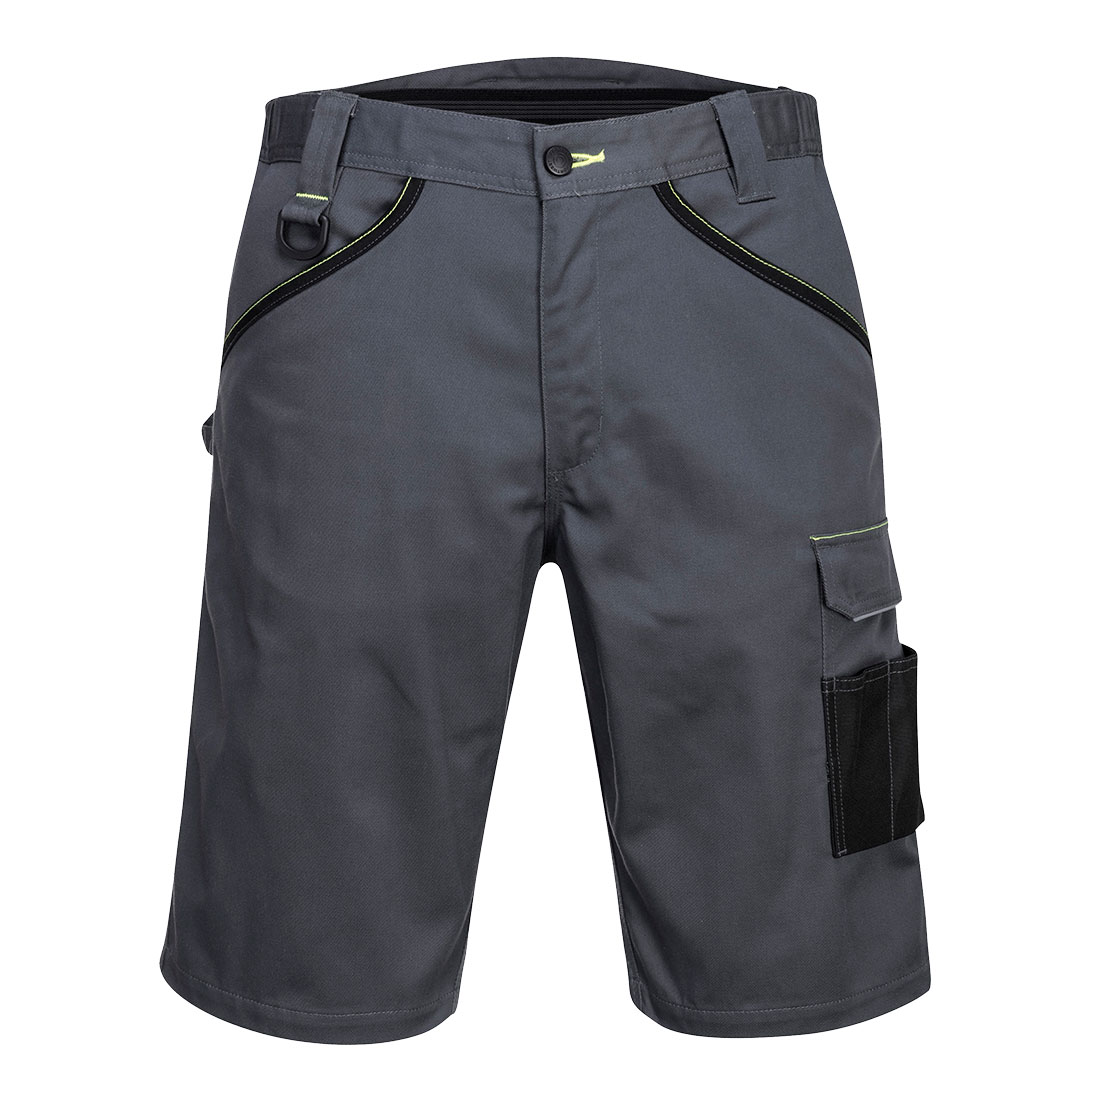 PW3 Work Shorts Velikost: 36, Barva: Zoom Grey/Black